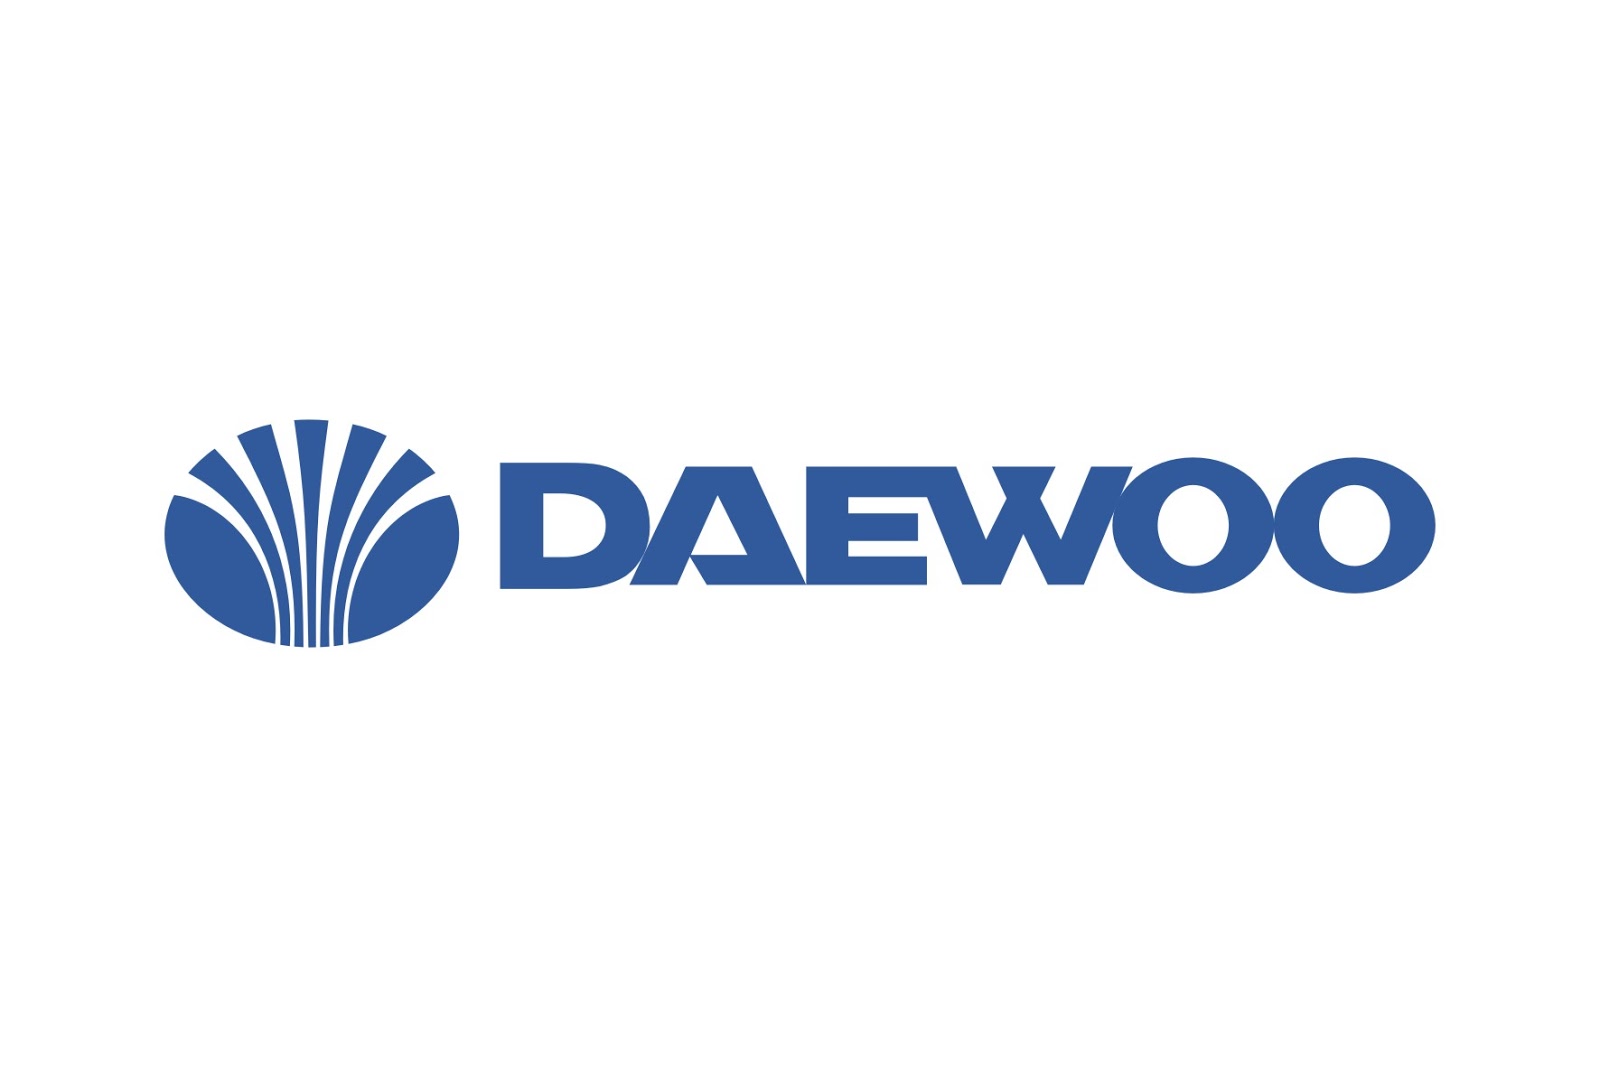 Daewoo Brand Logo Wallpaper HD Mega